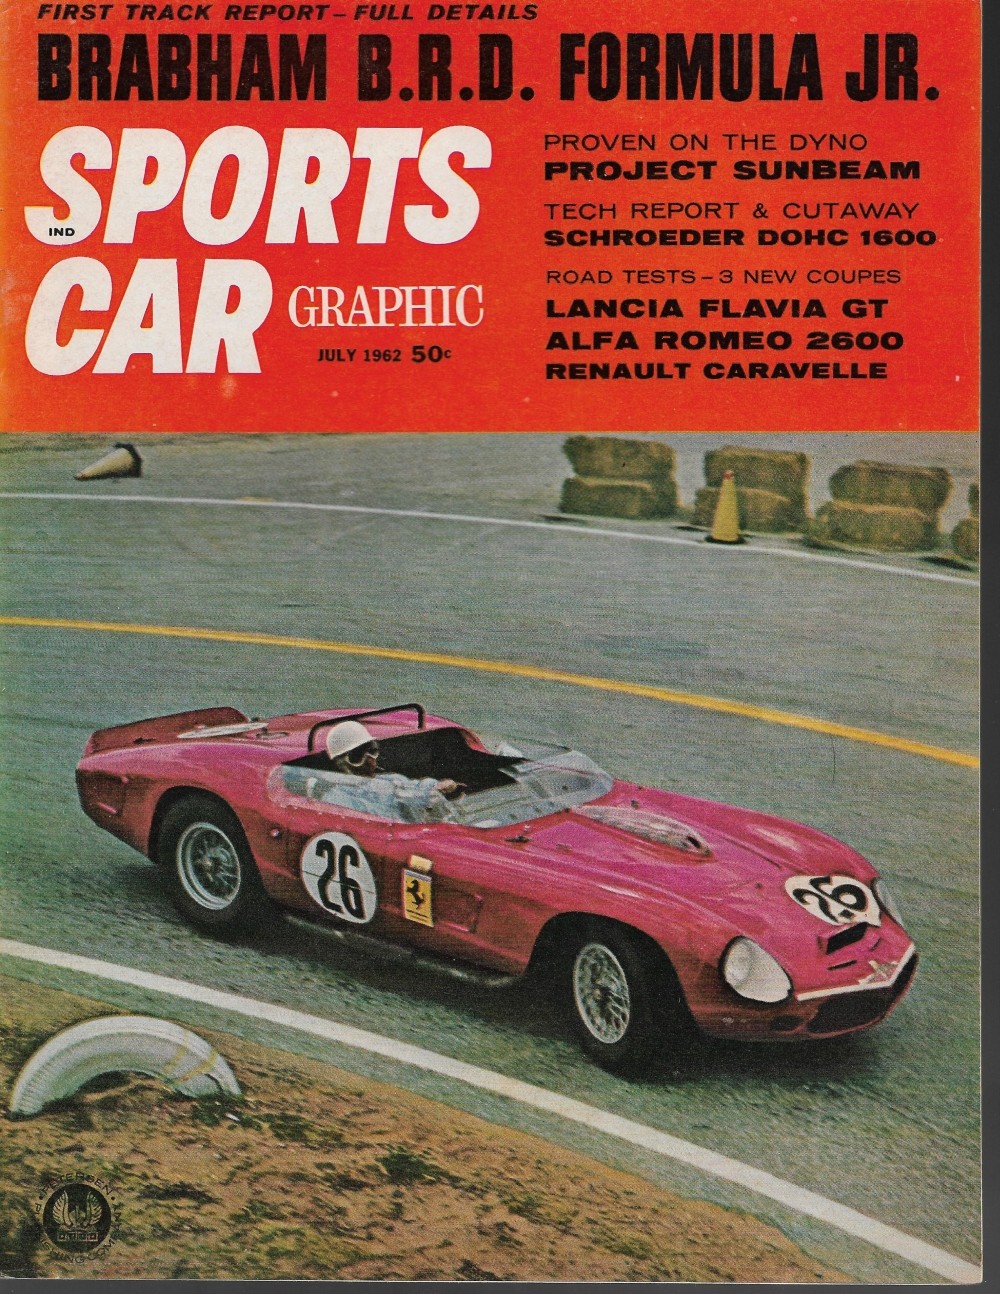 SPORTS CAR GRAPHIC 1962 JULY - CARAVELLE, FLAVIA, ALFA 2600 SPRINT ...